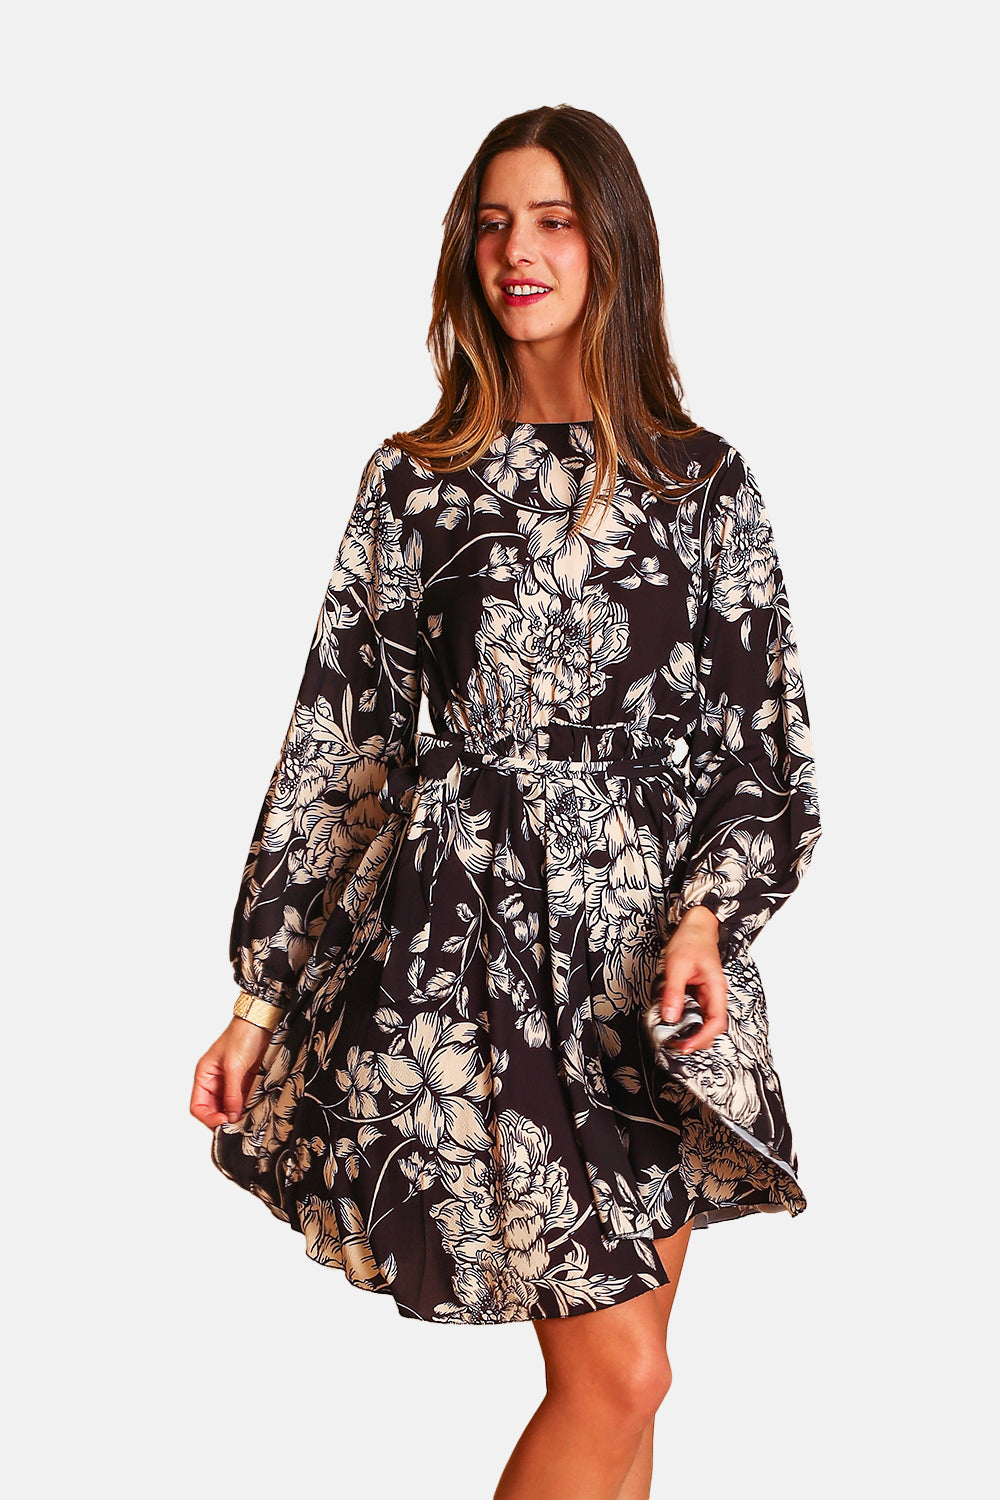 Design Print Dress with Long Sleeve Pockets